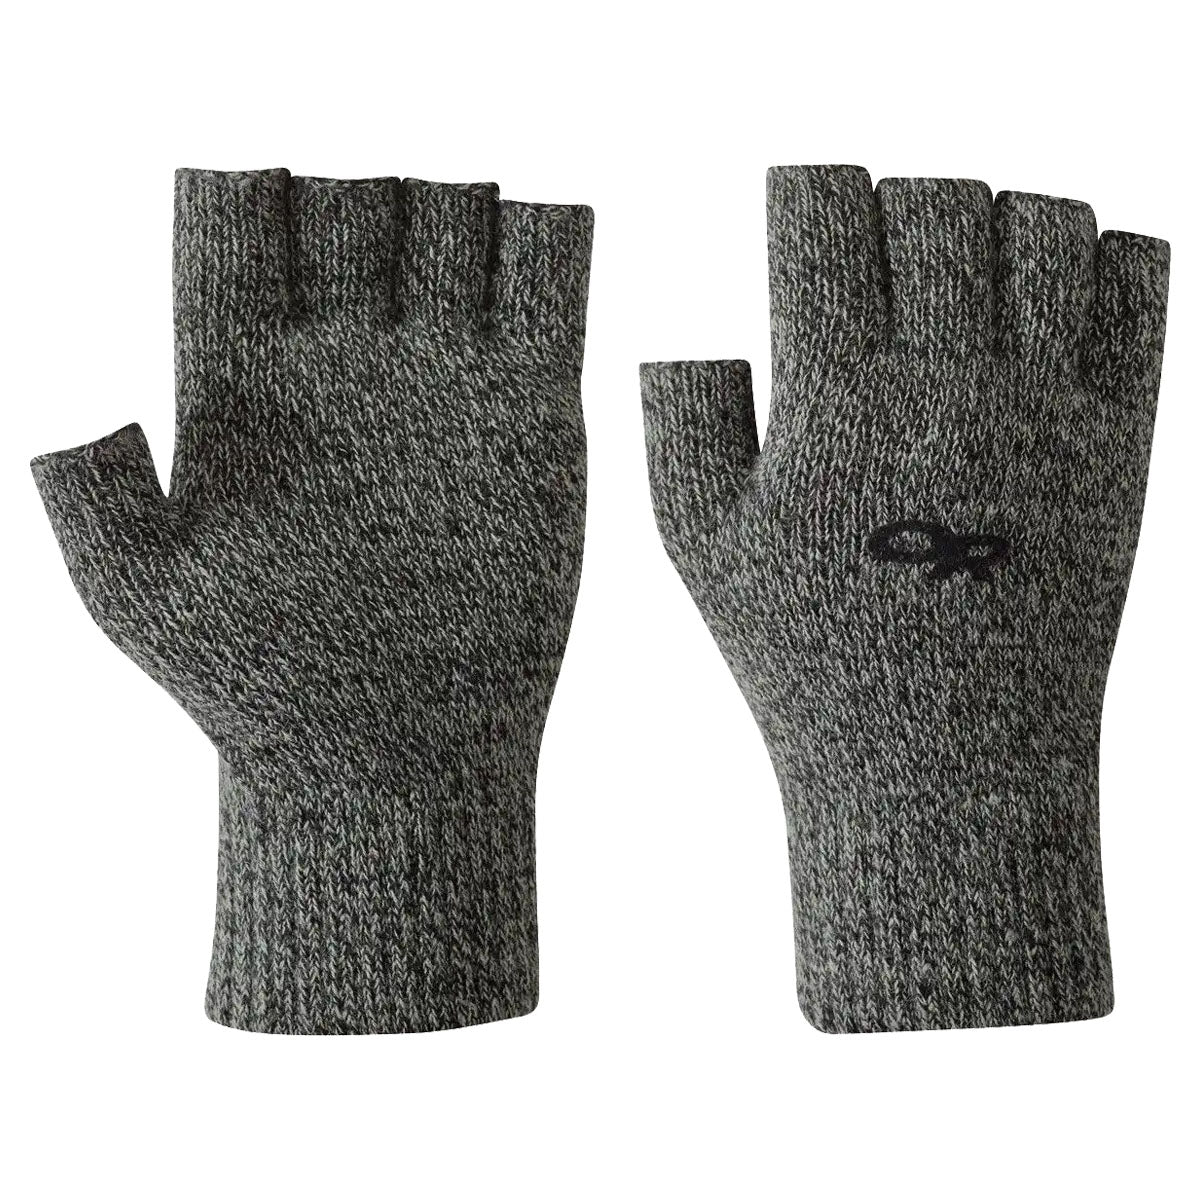 Outdoor Research Fairbanks Fingerless Gloves in  by GOHUNT | Outdoor Research - GOHUNT Shop